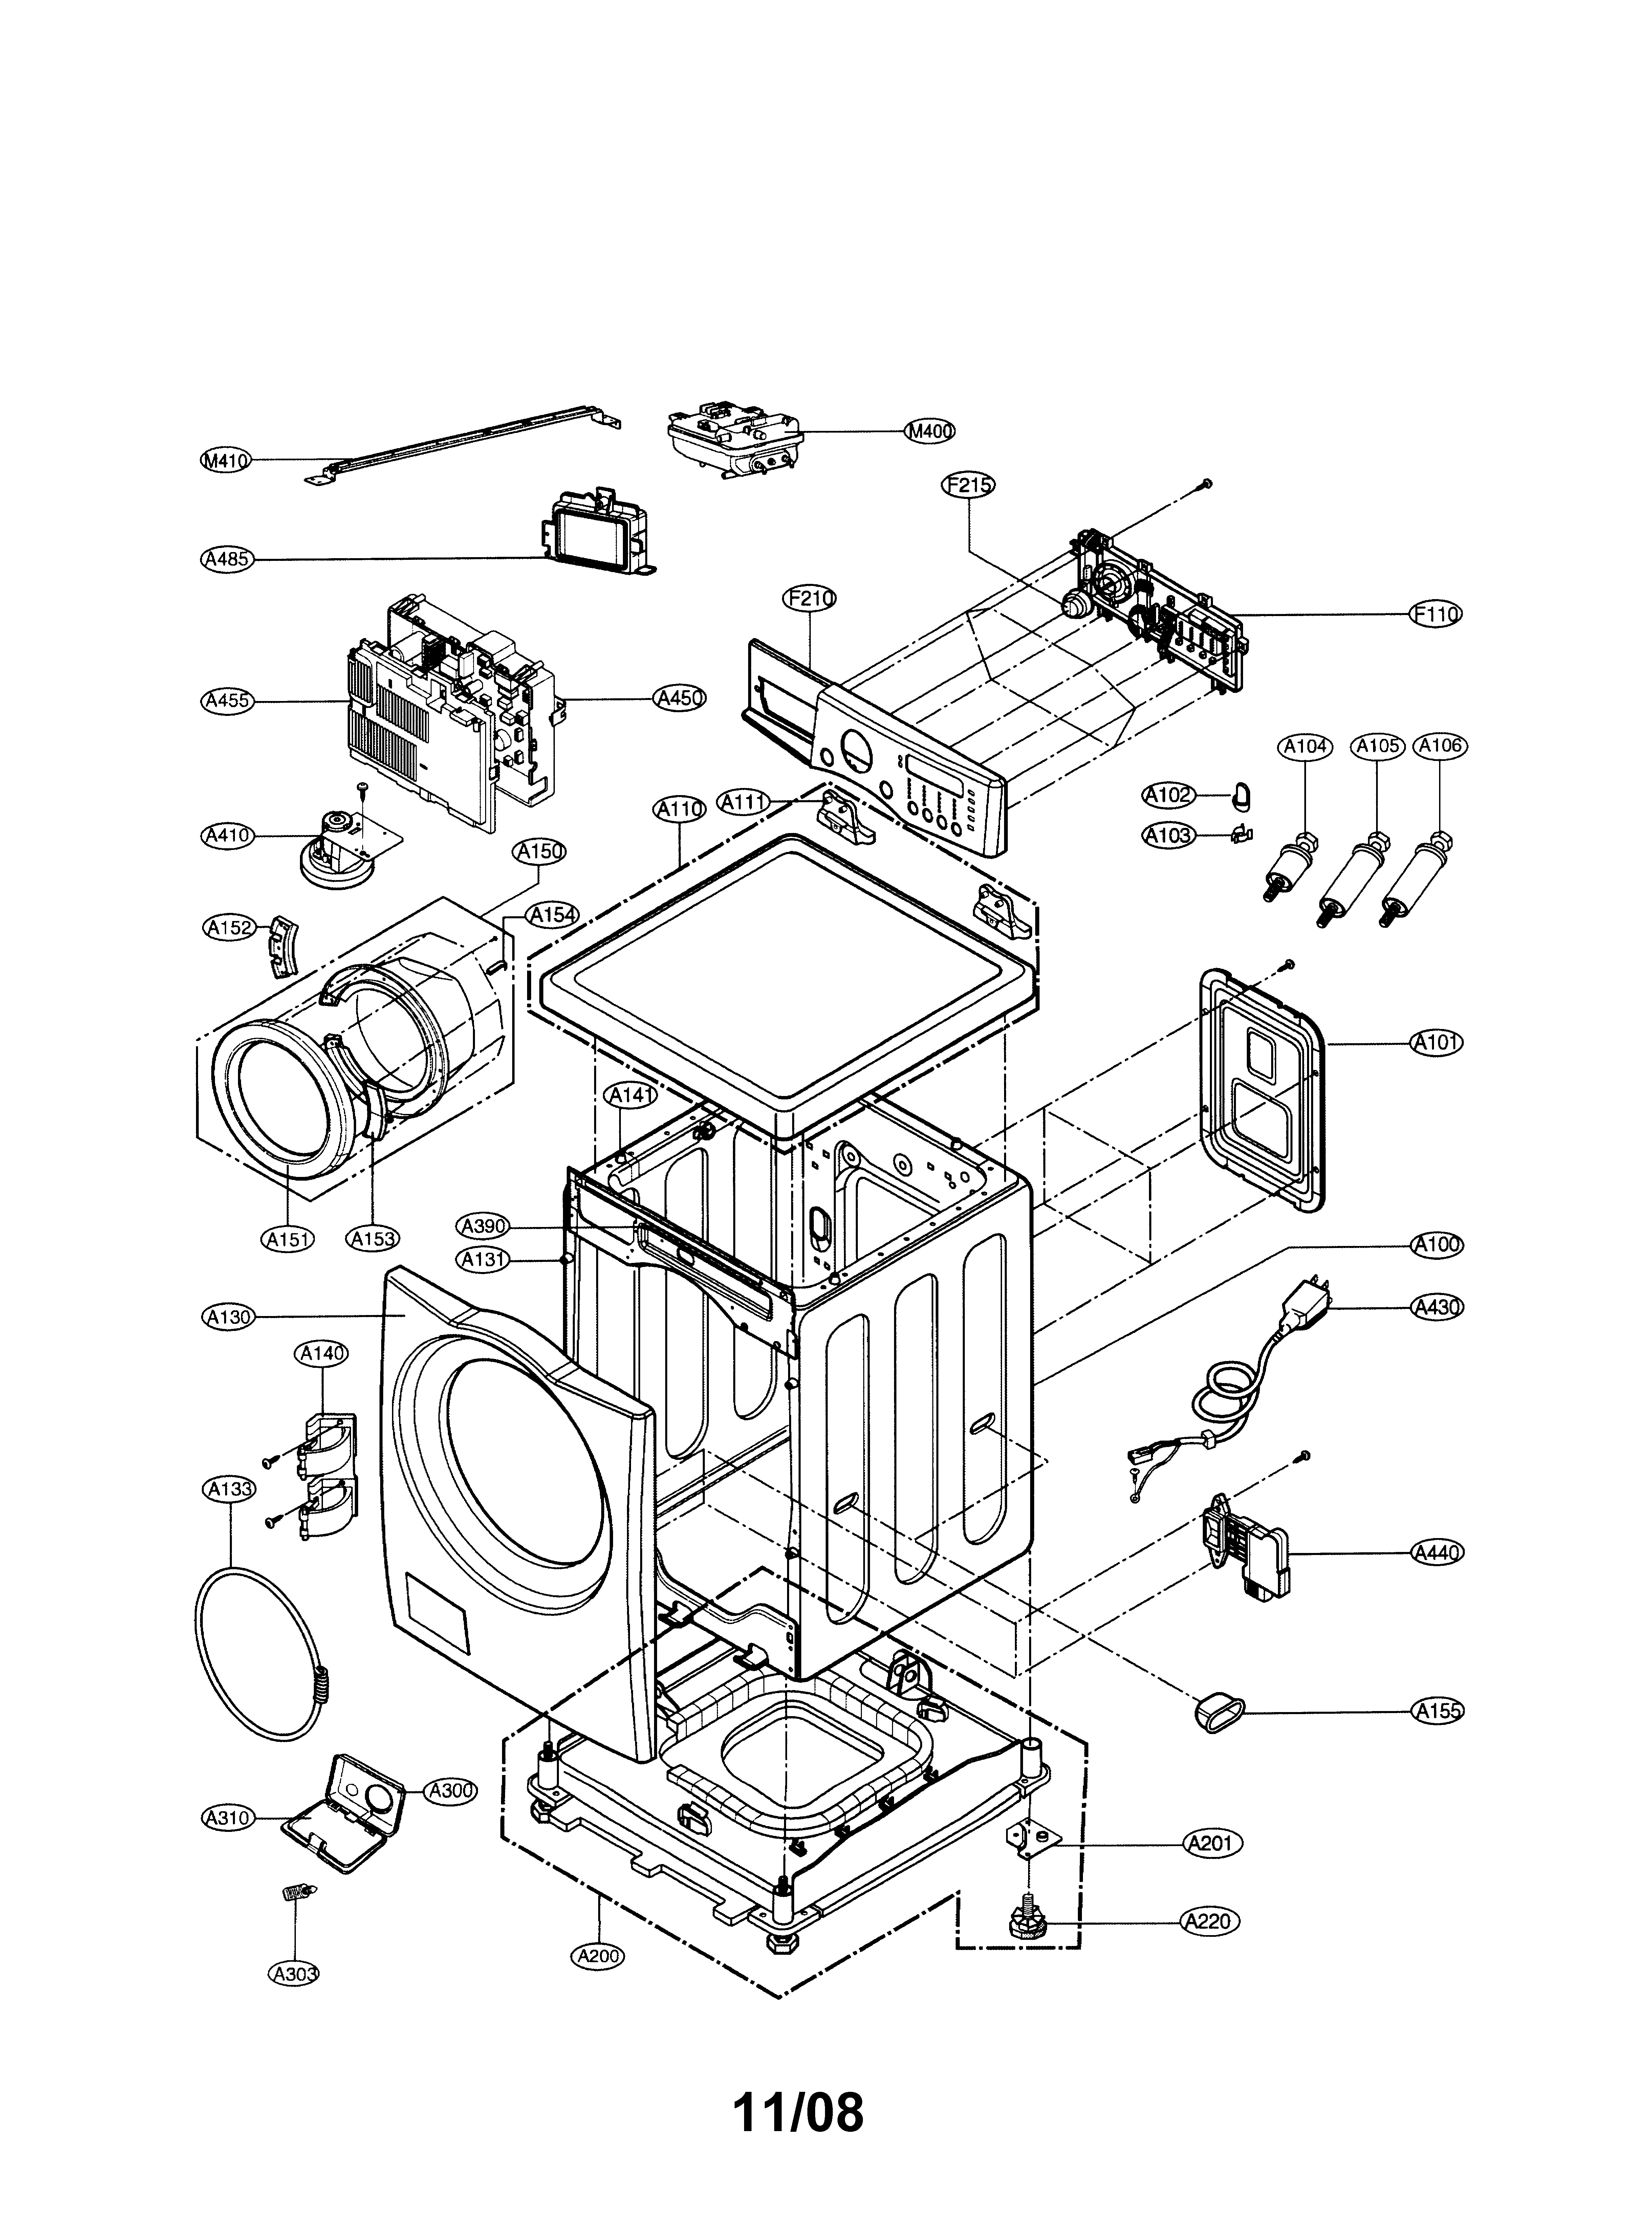 31 Lg Washer Parts Diagram